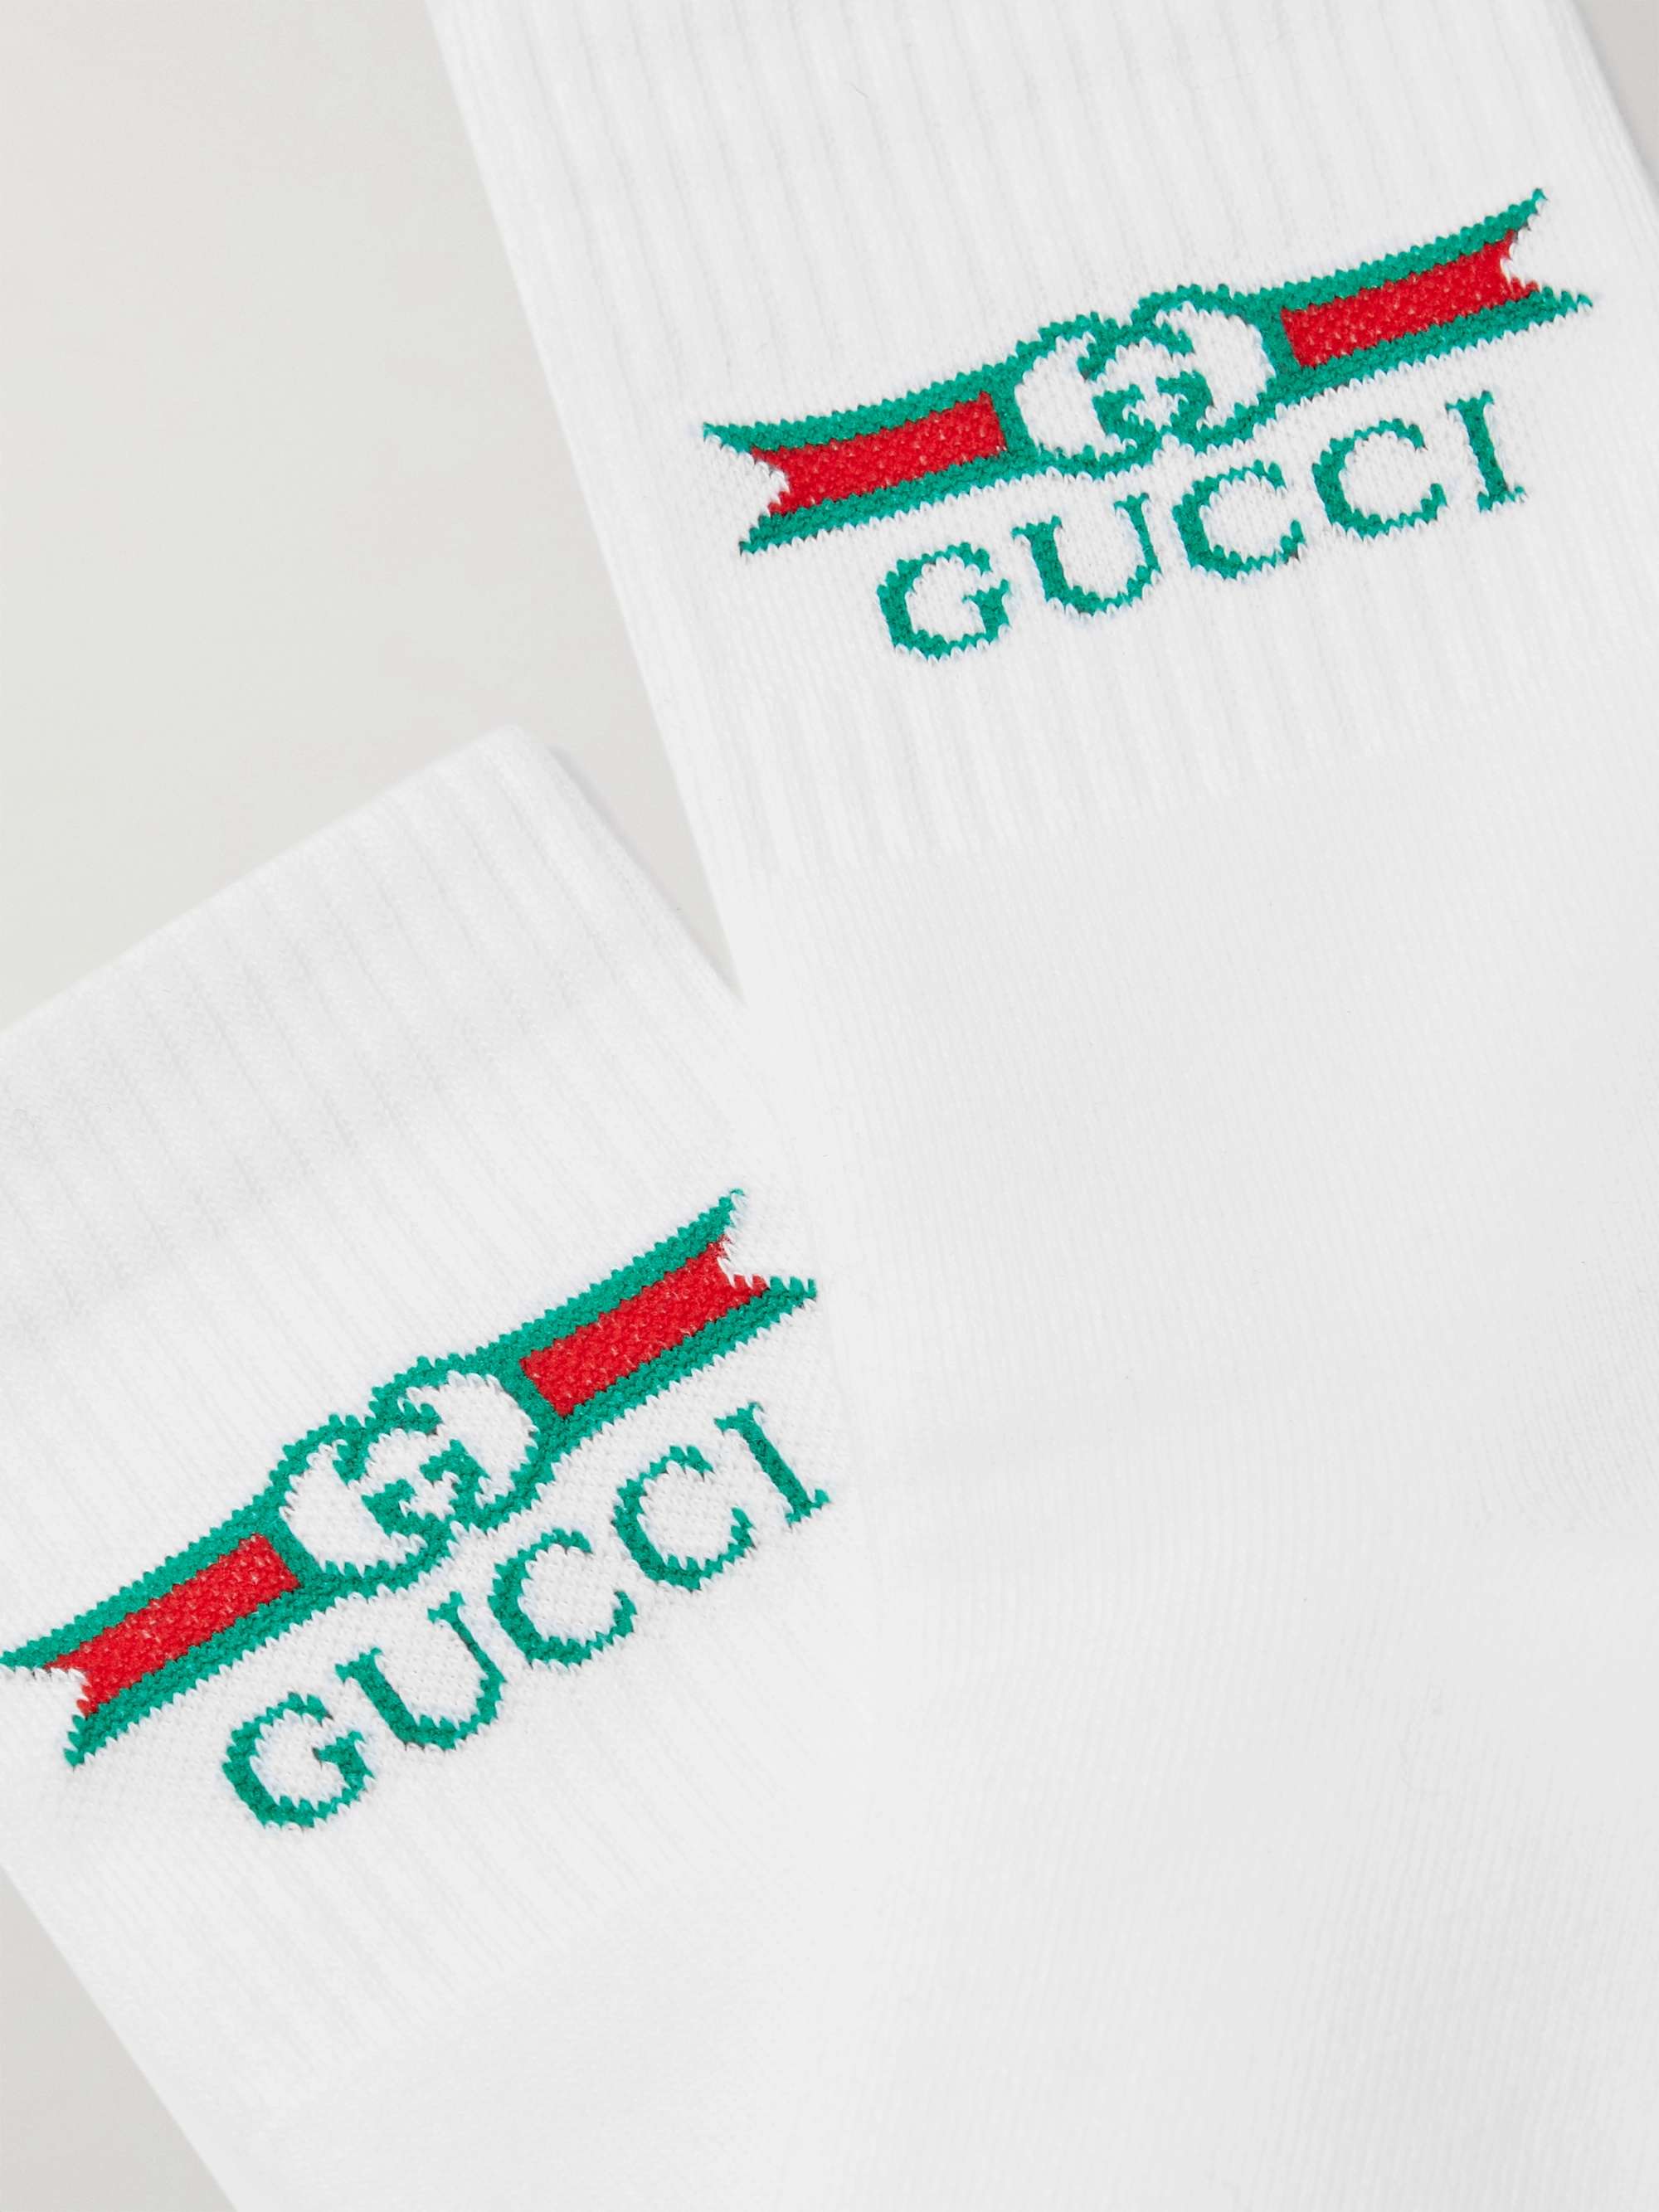 GUCCI Logo-Intarsia Ribbed Stretch Cotton-Blend Socks